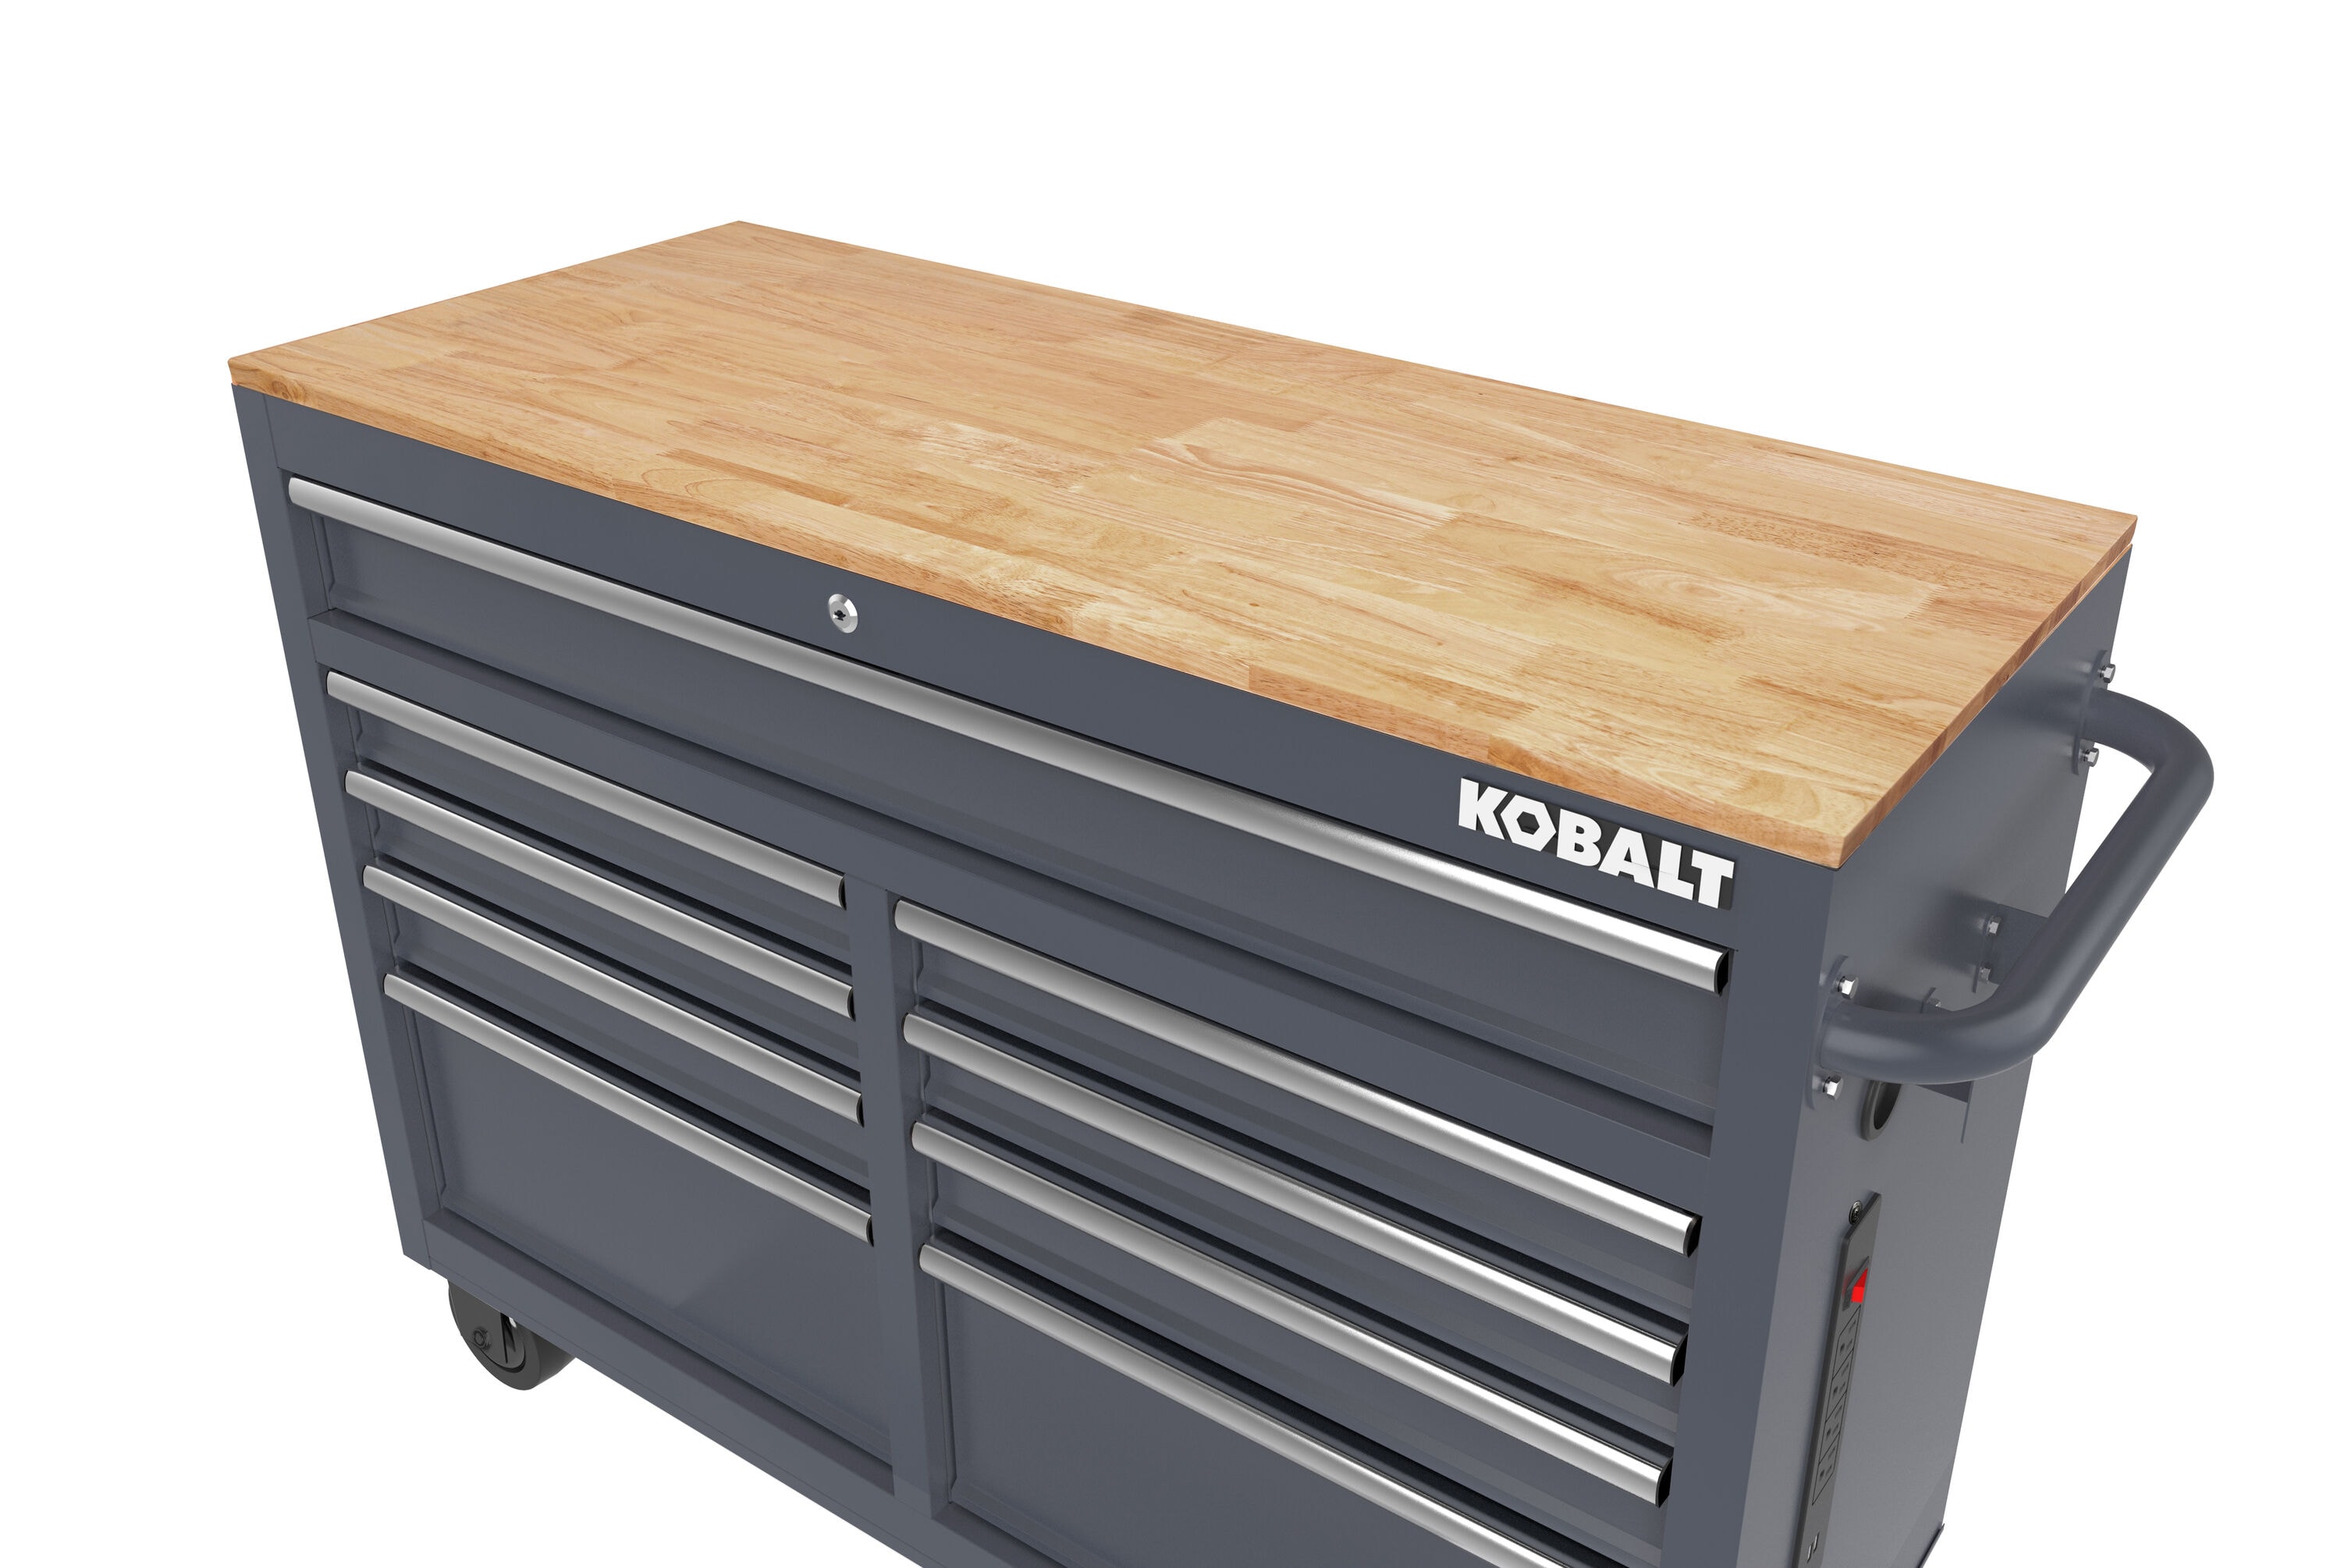 Kobalt Zerust PVC /Rubber Drawer Liner Roll in the Tool Storage